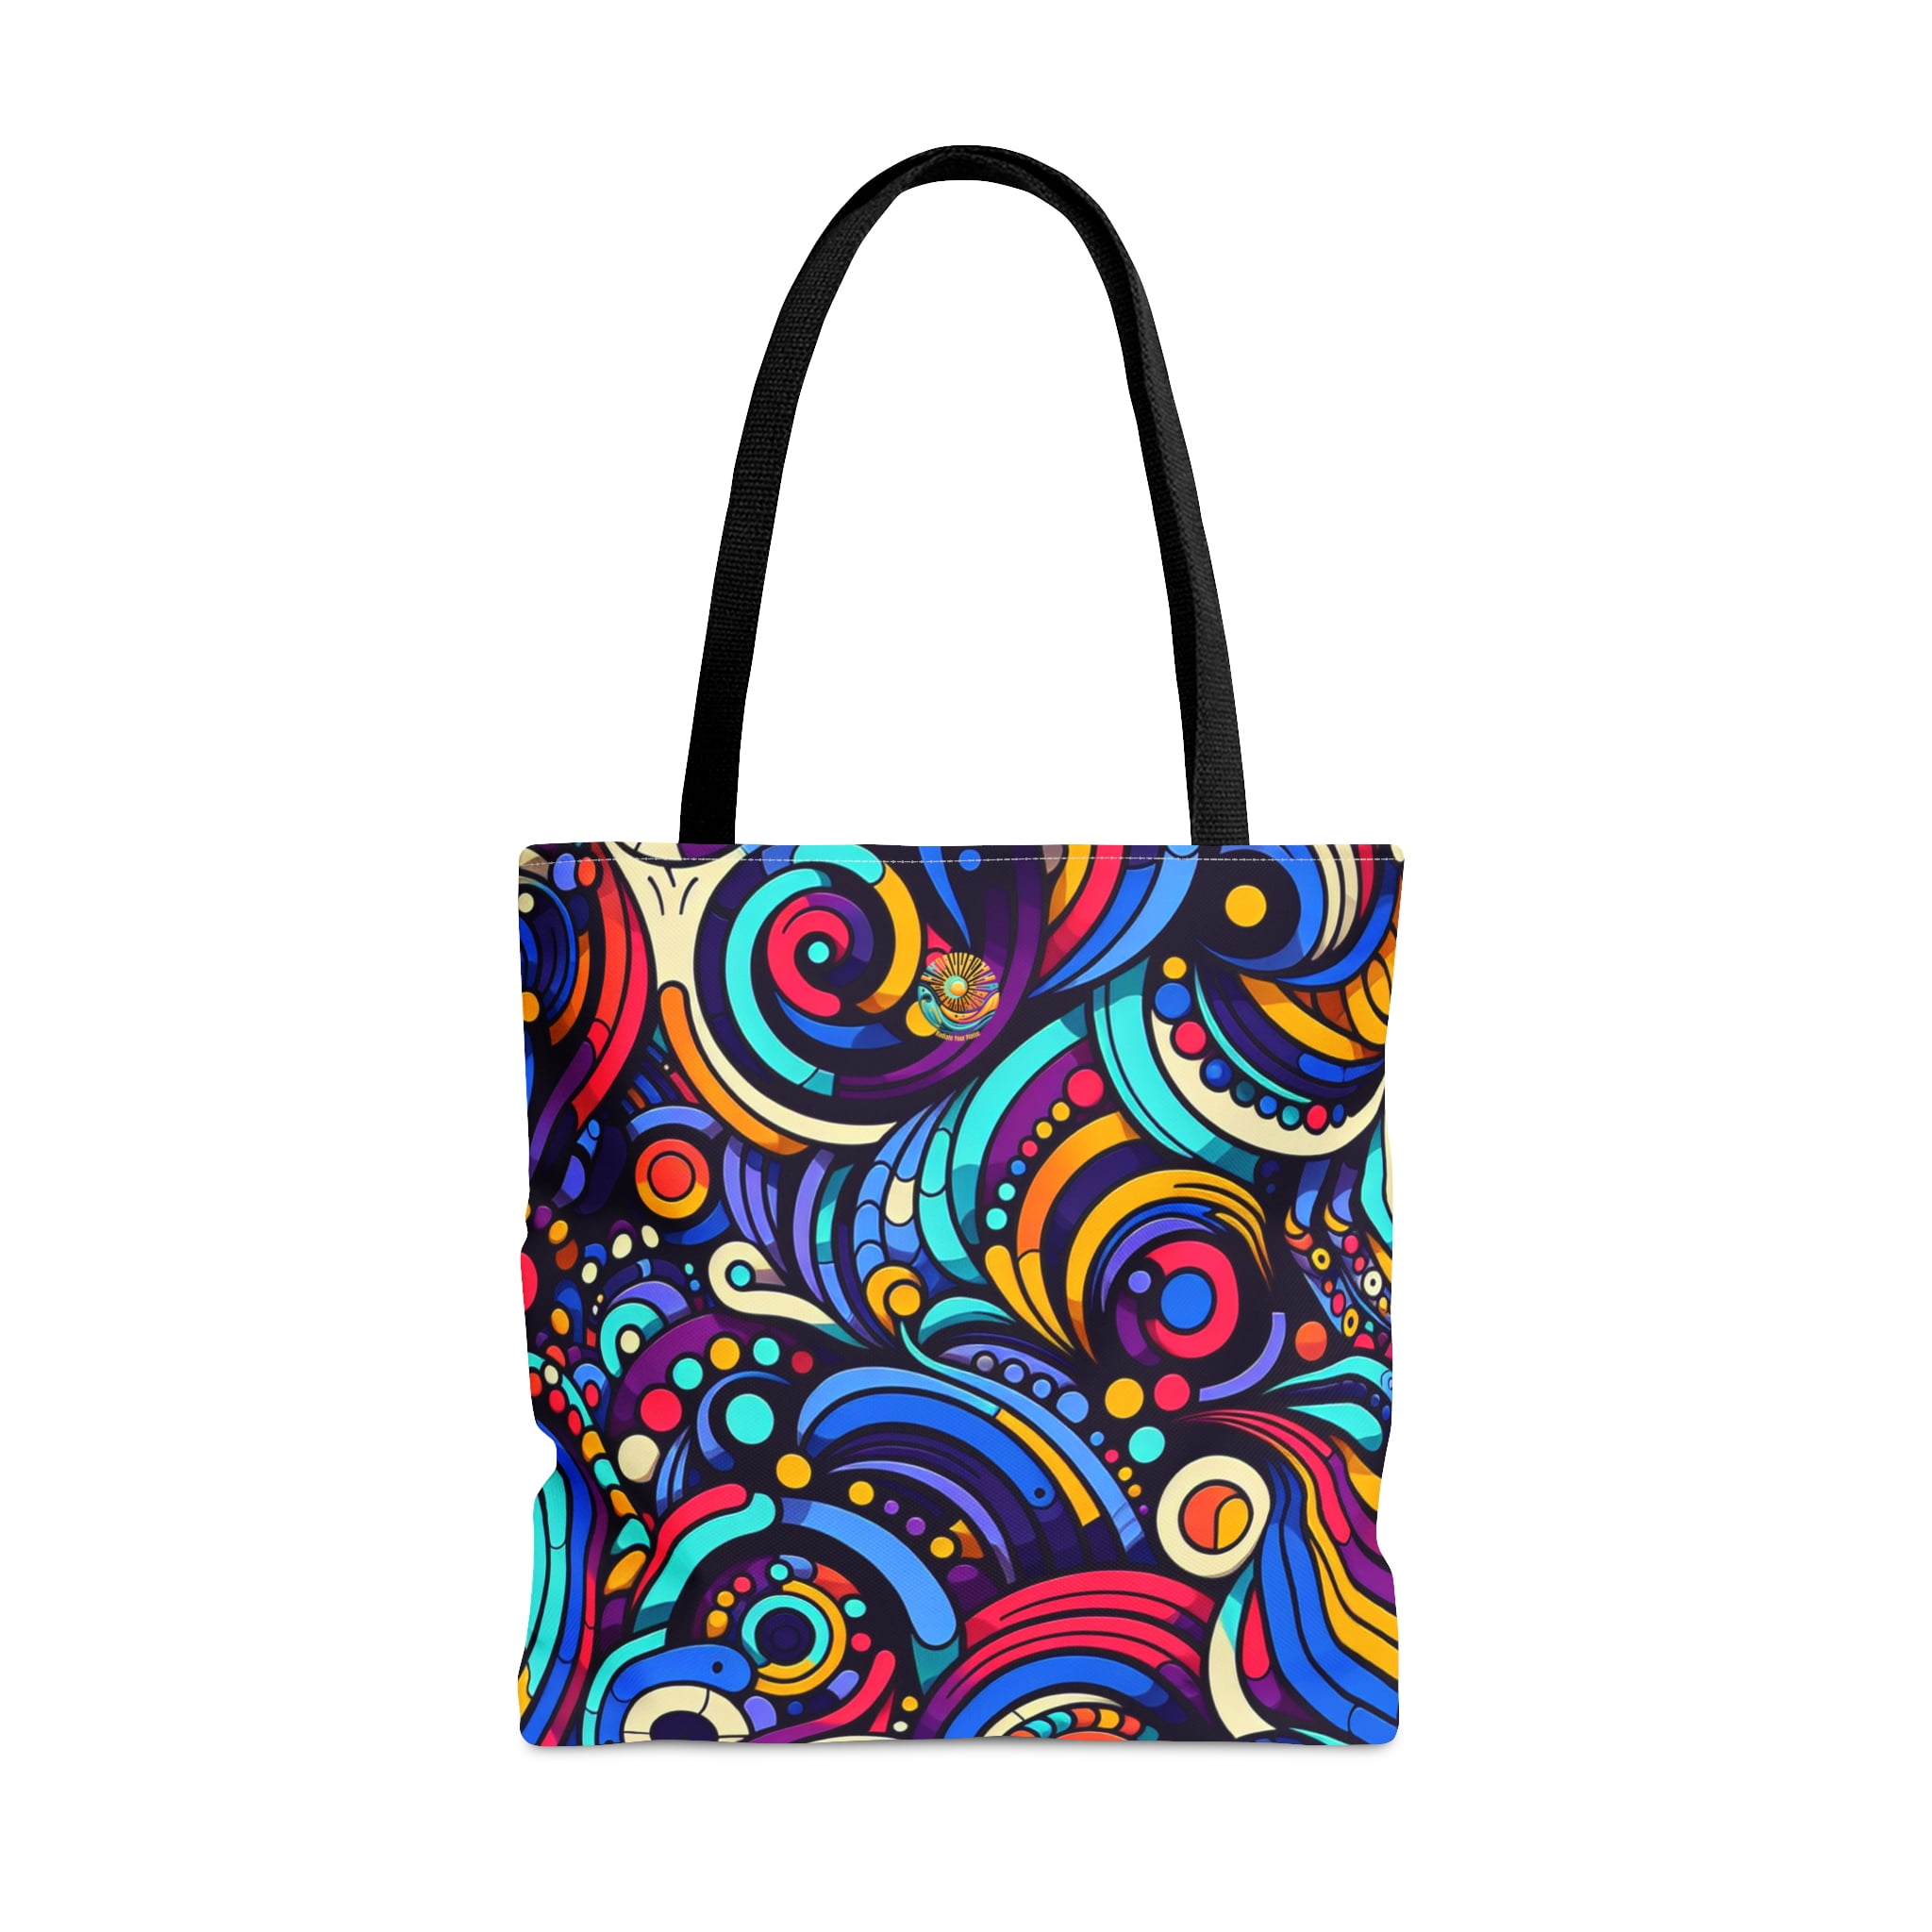 ROSETTI Floral Cascade Tote Bag Purse Handbag Americas Favorites 15x12x4”.  - Women's handbags